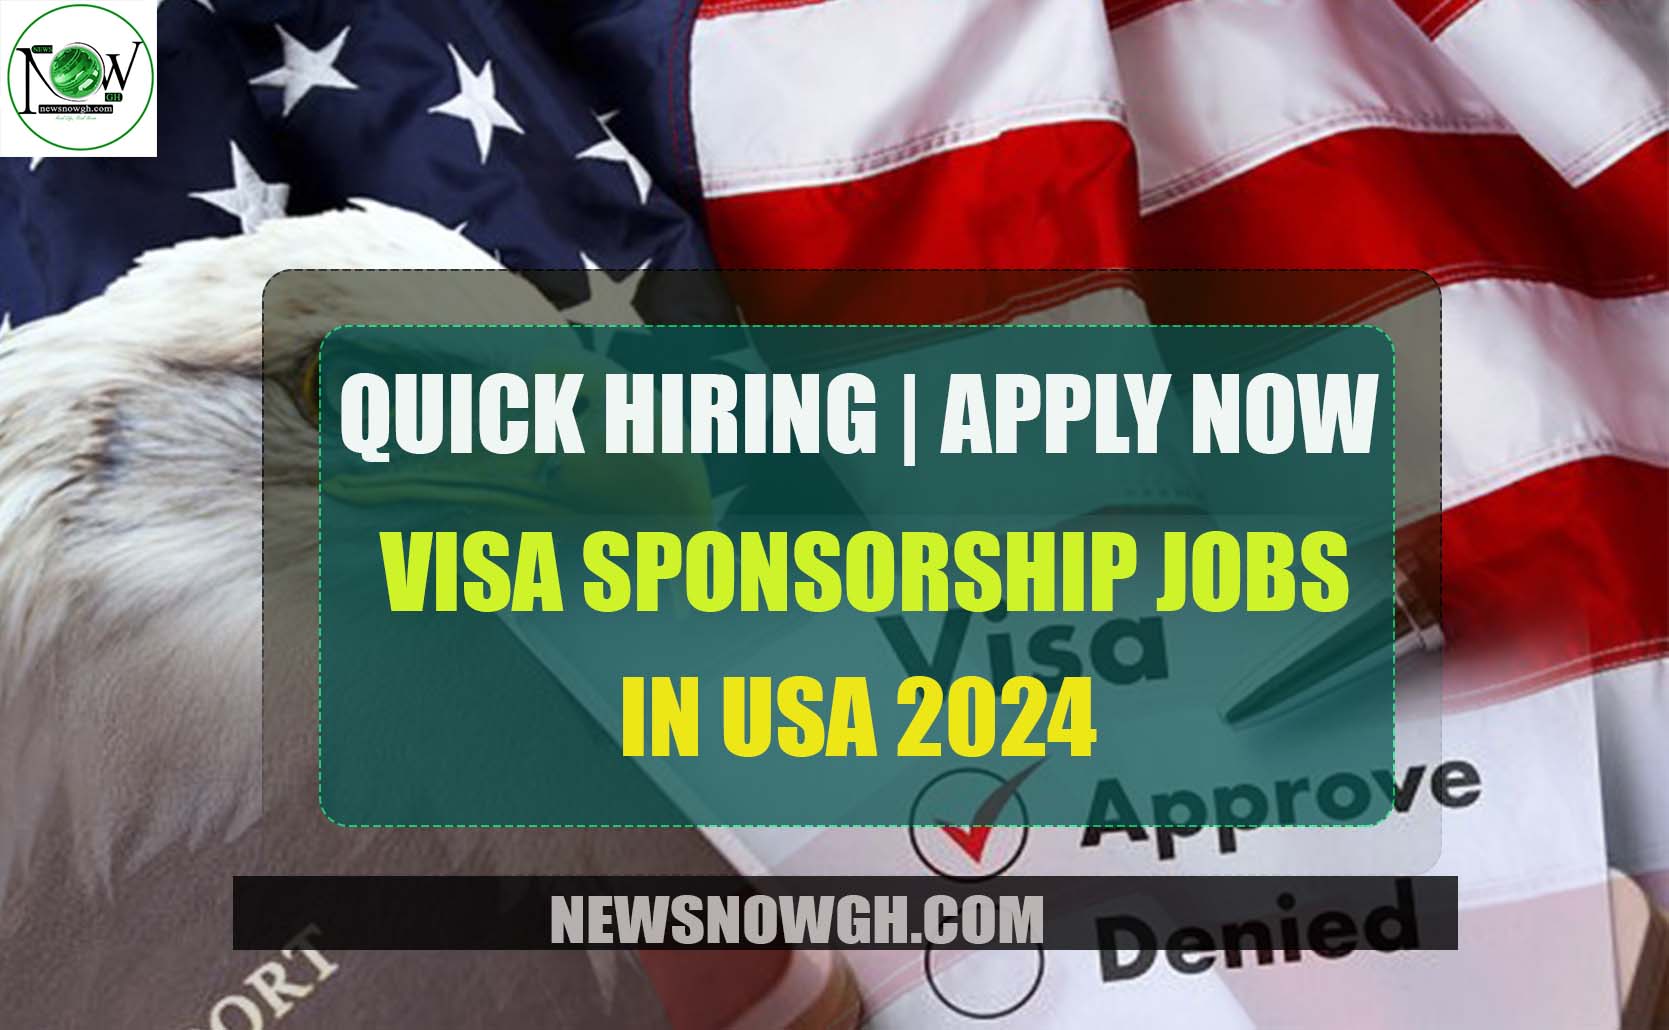 Visa Sponsorship Jobs in USA 2024 Quick Hing Apply Now